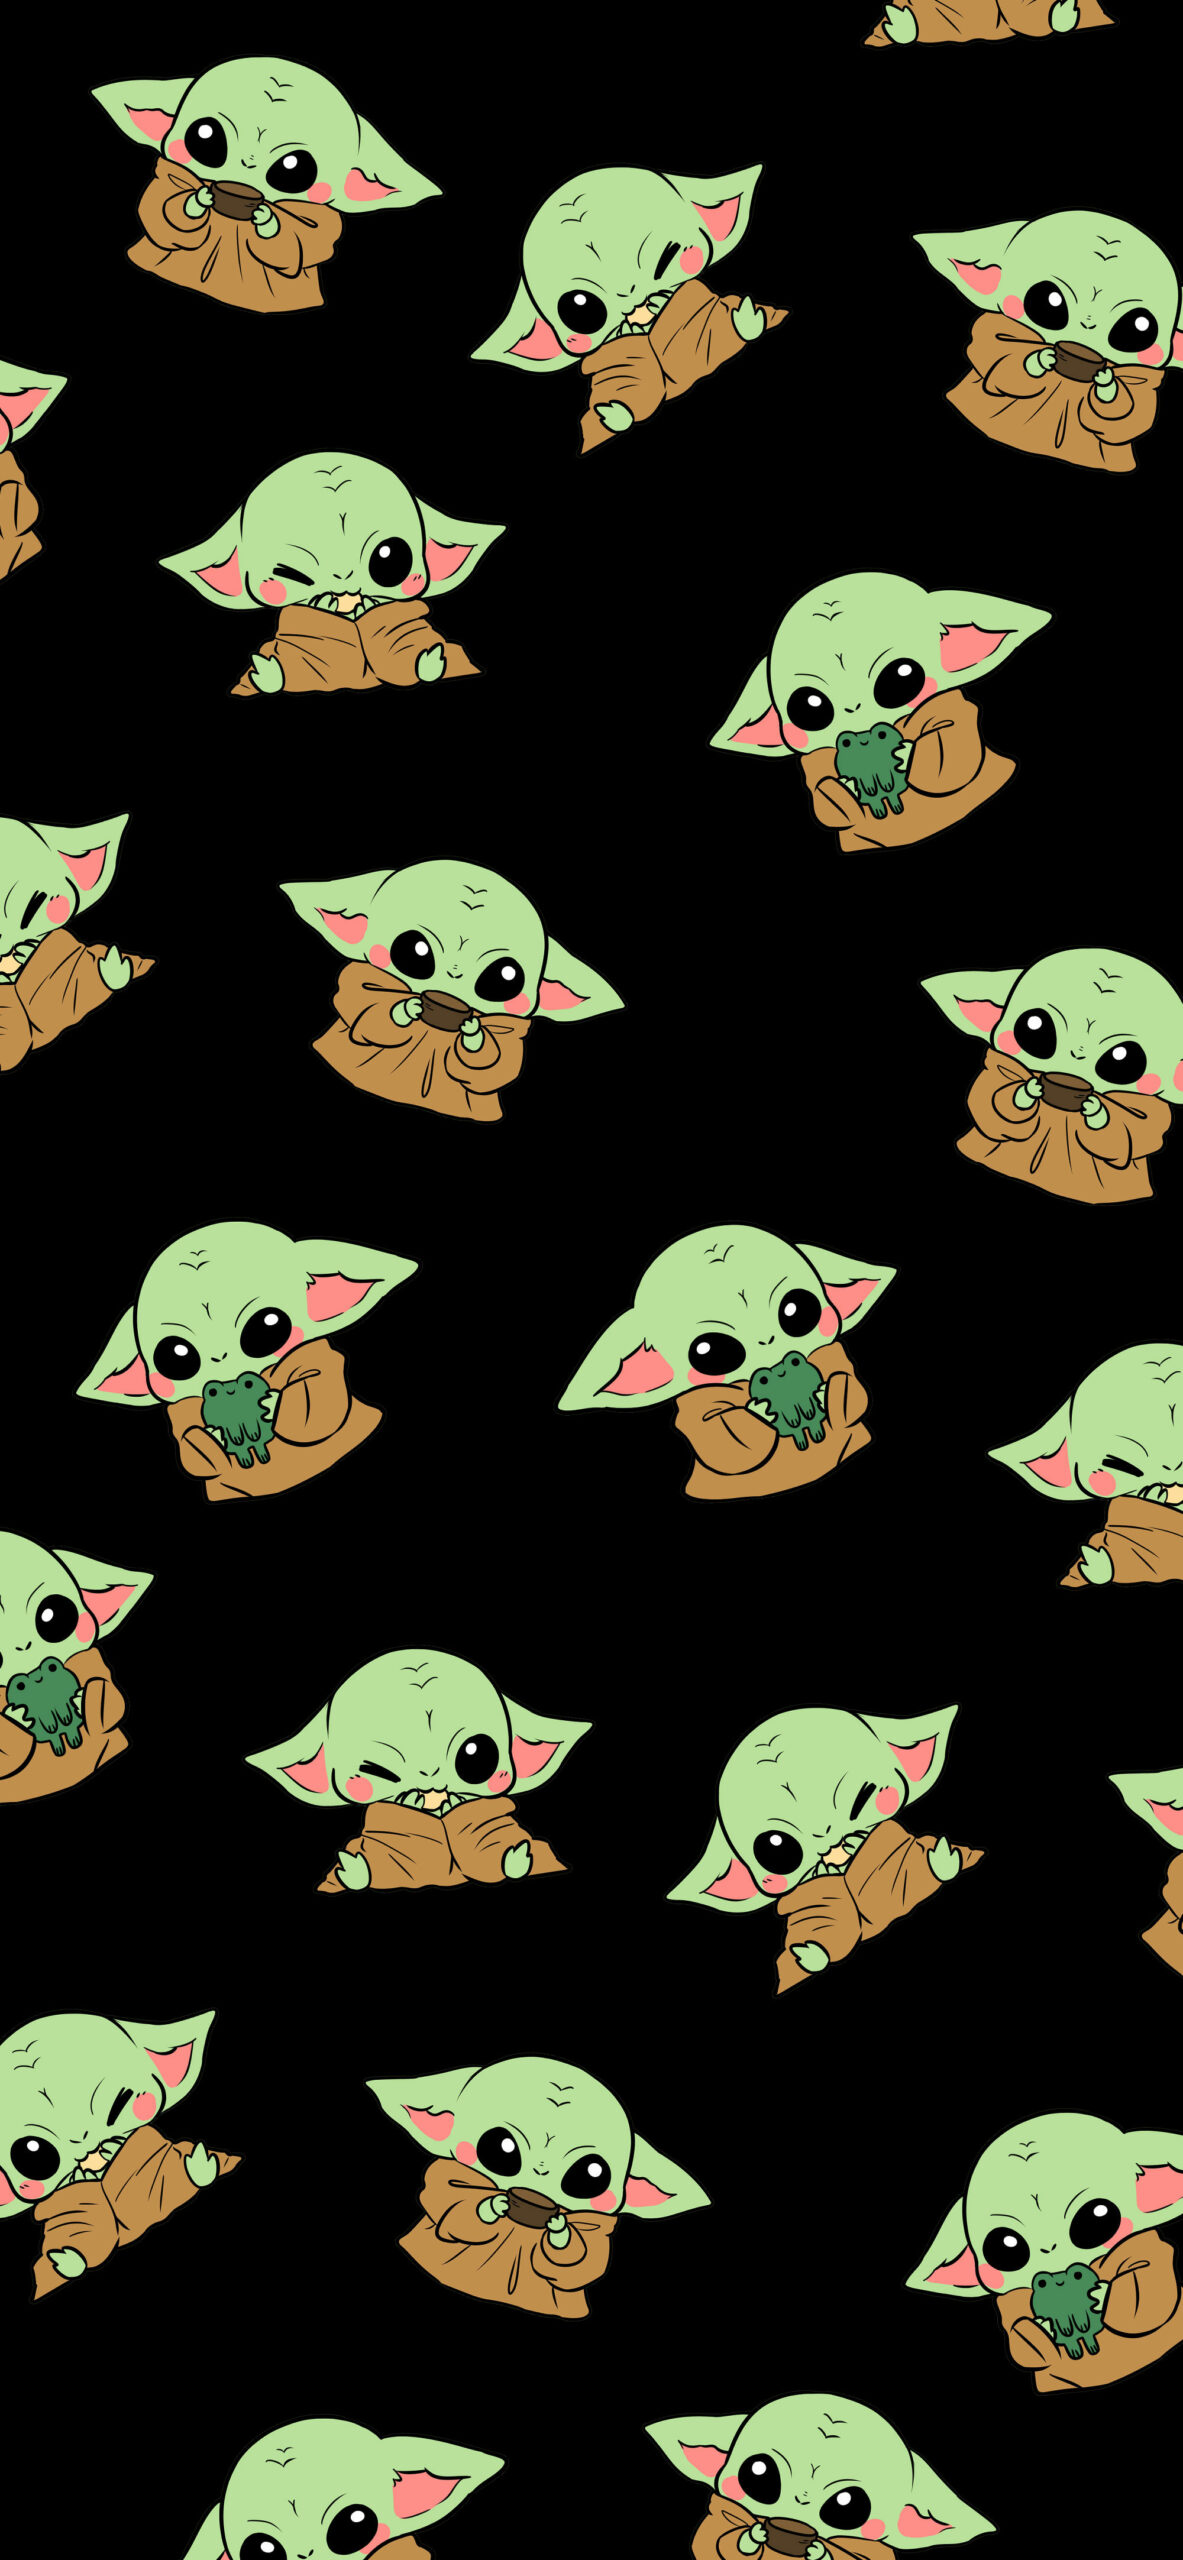 Free Baby Yoda Wallpaper Downloads 100 Baby Yoda Wallpapers for FREE   Wallpaperscom